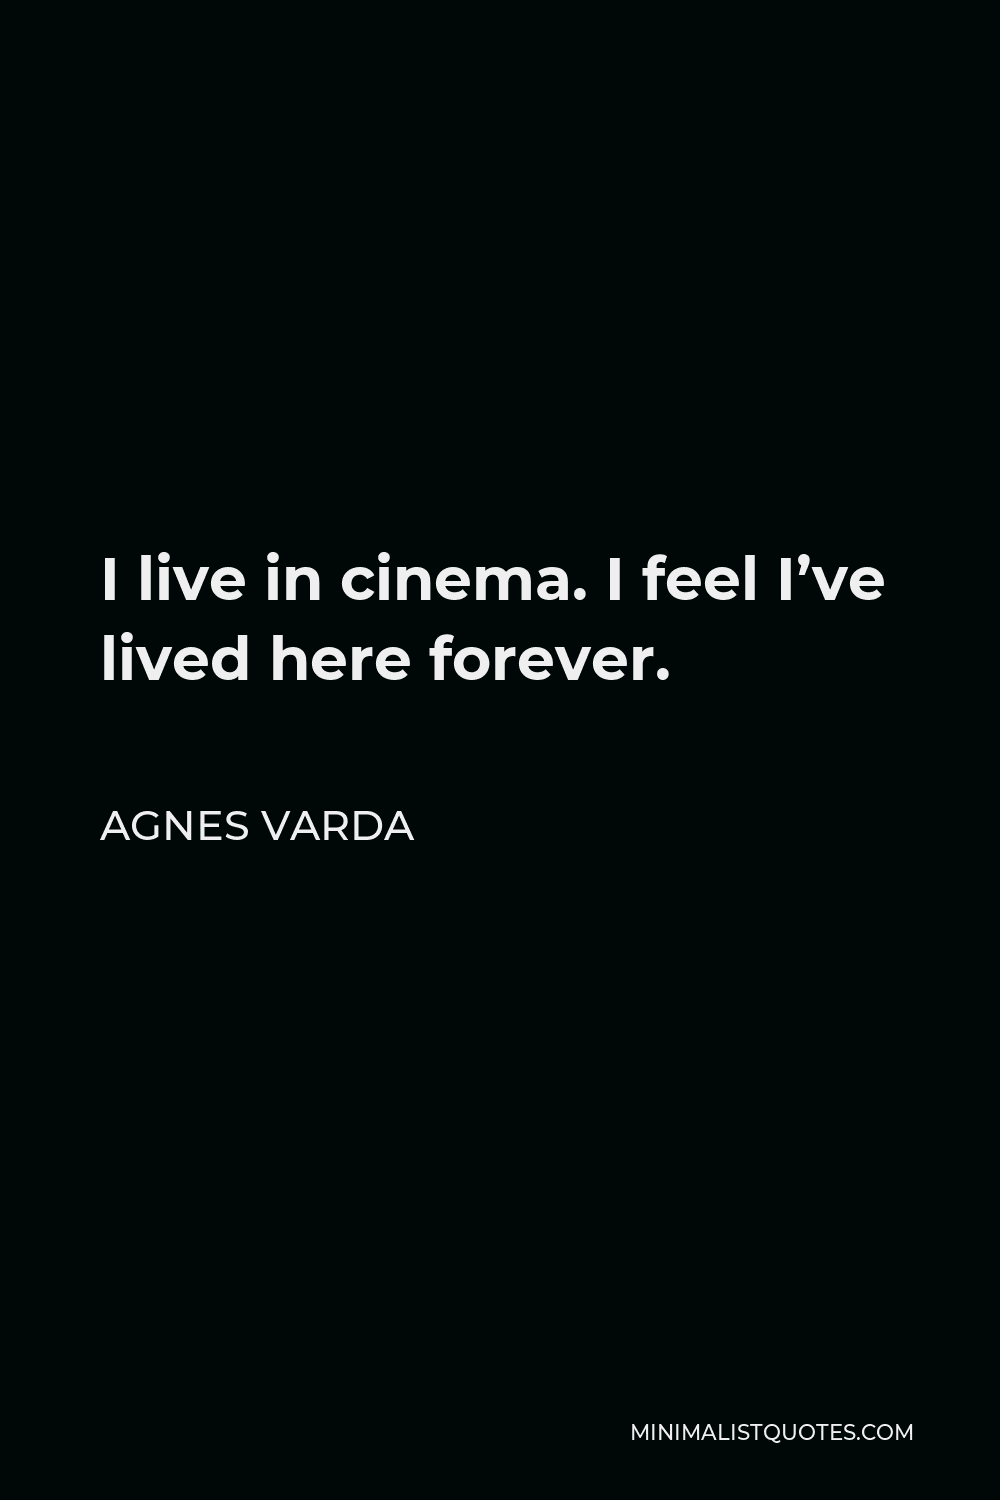 Agnes Varda Quote - I live in cinema. I feel I’ve lived here forever.